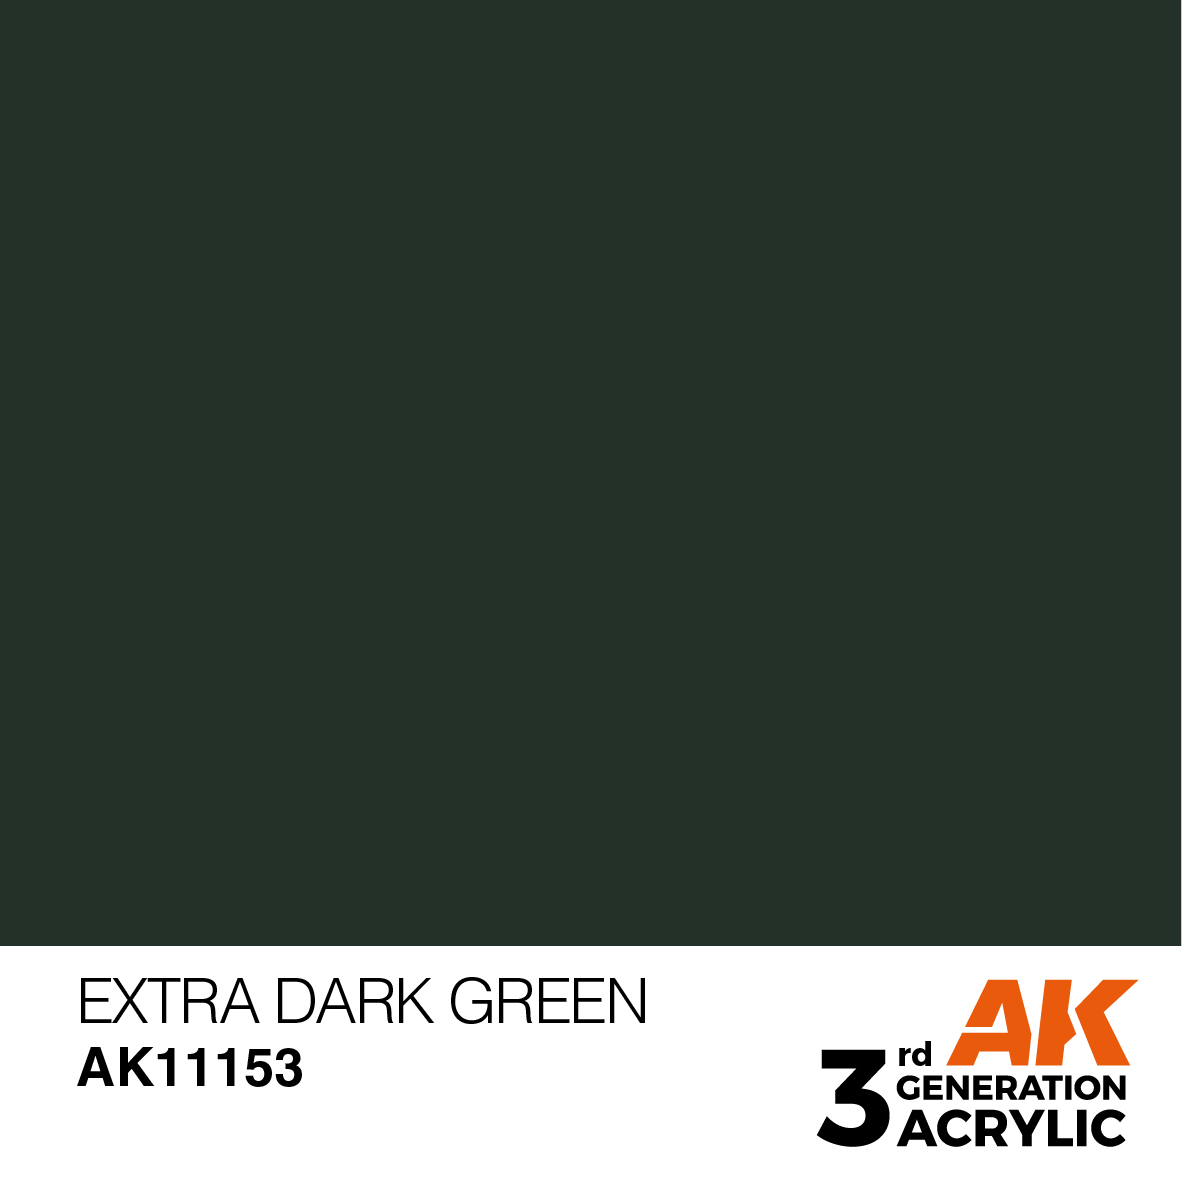 Buy EXTRA DARK GREEN – STANDARD online for2,75€